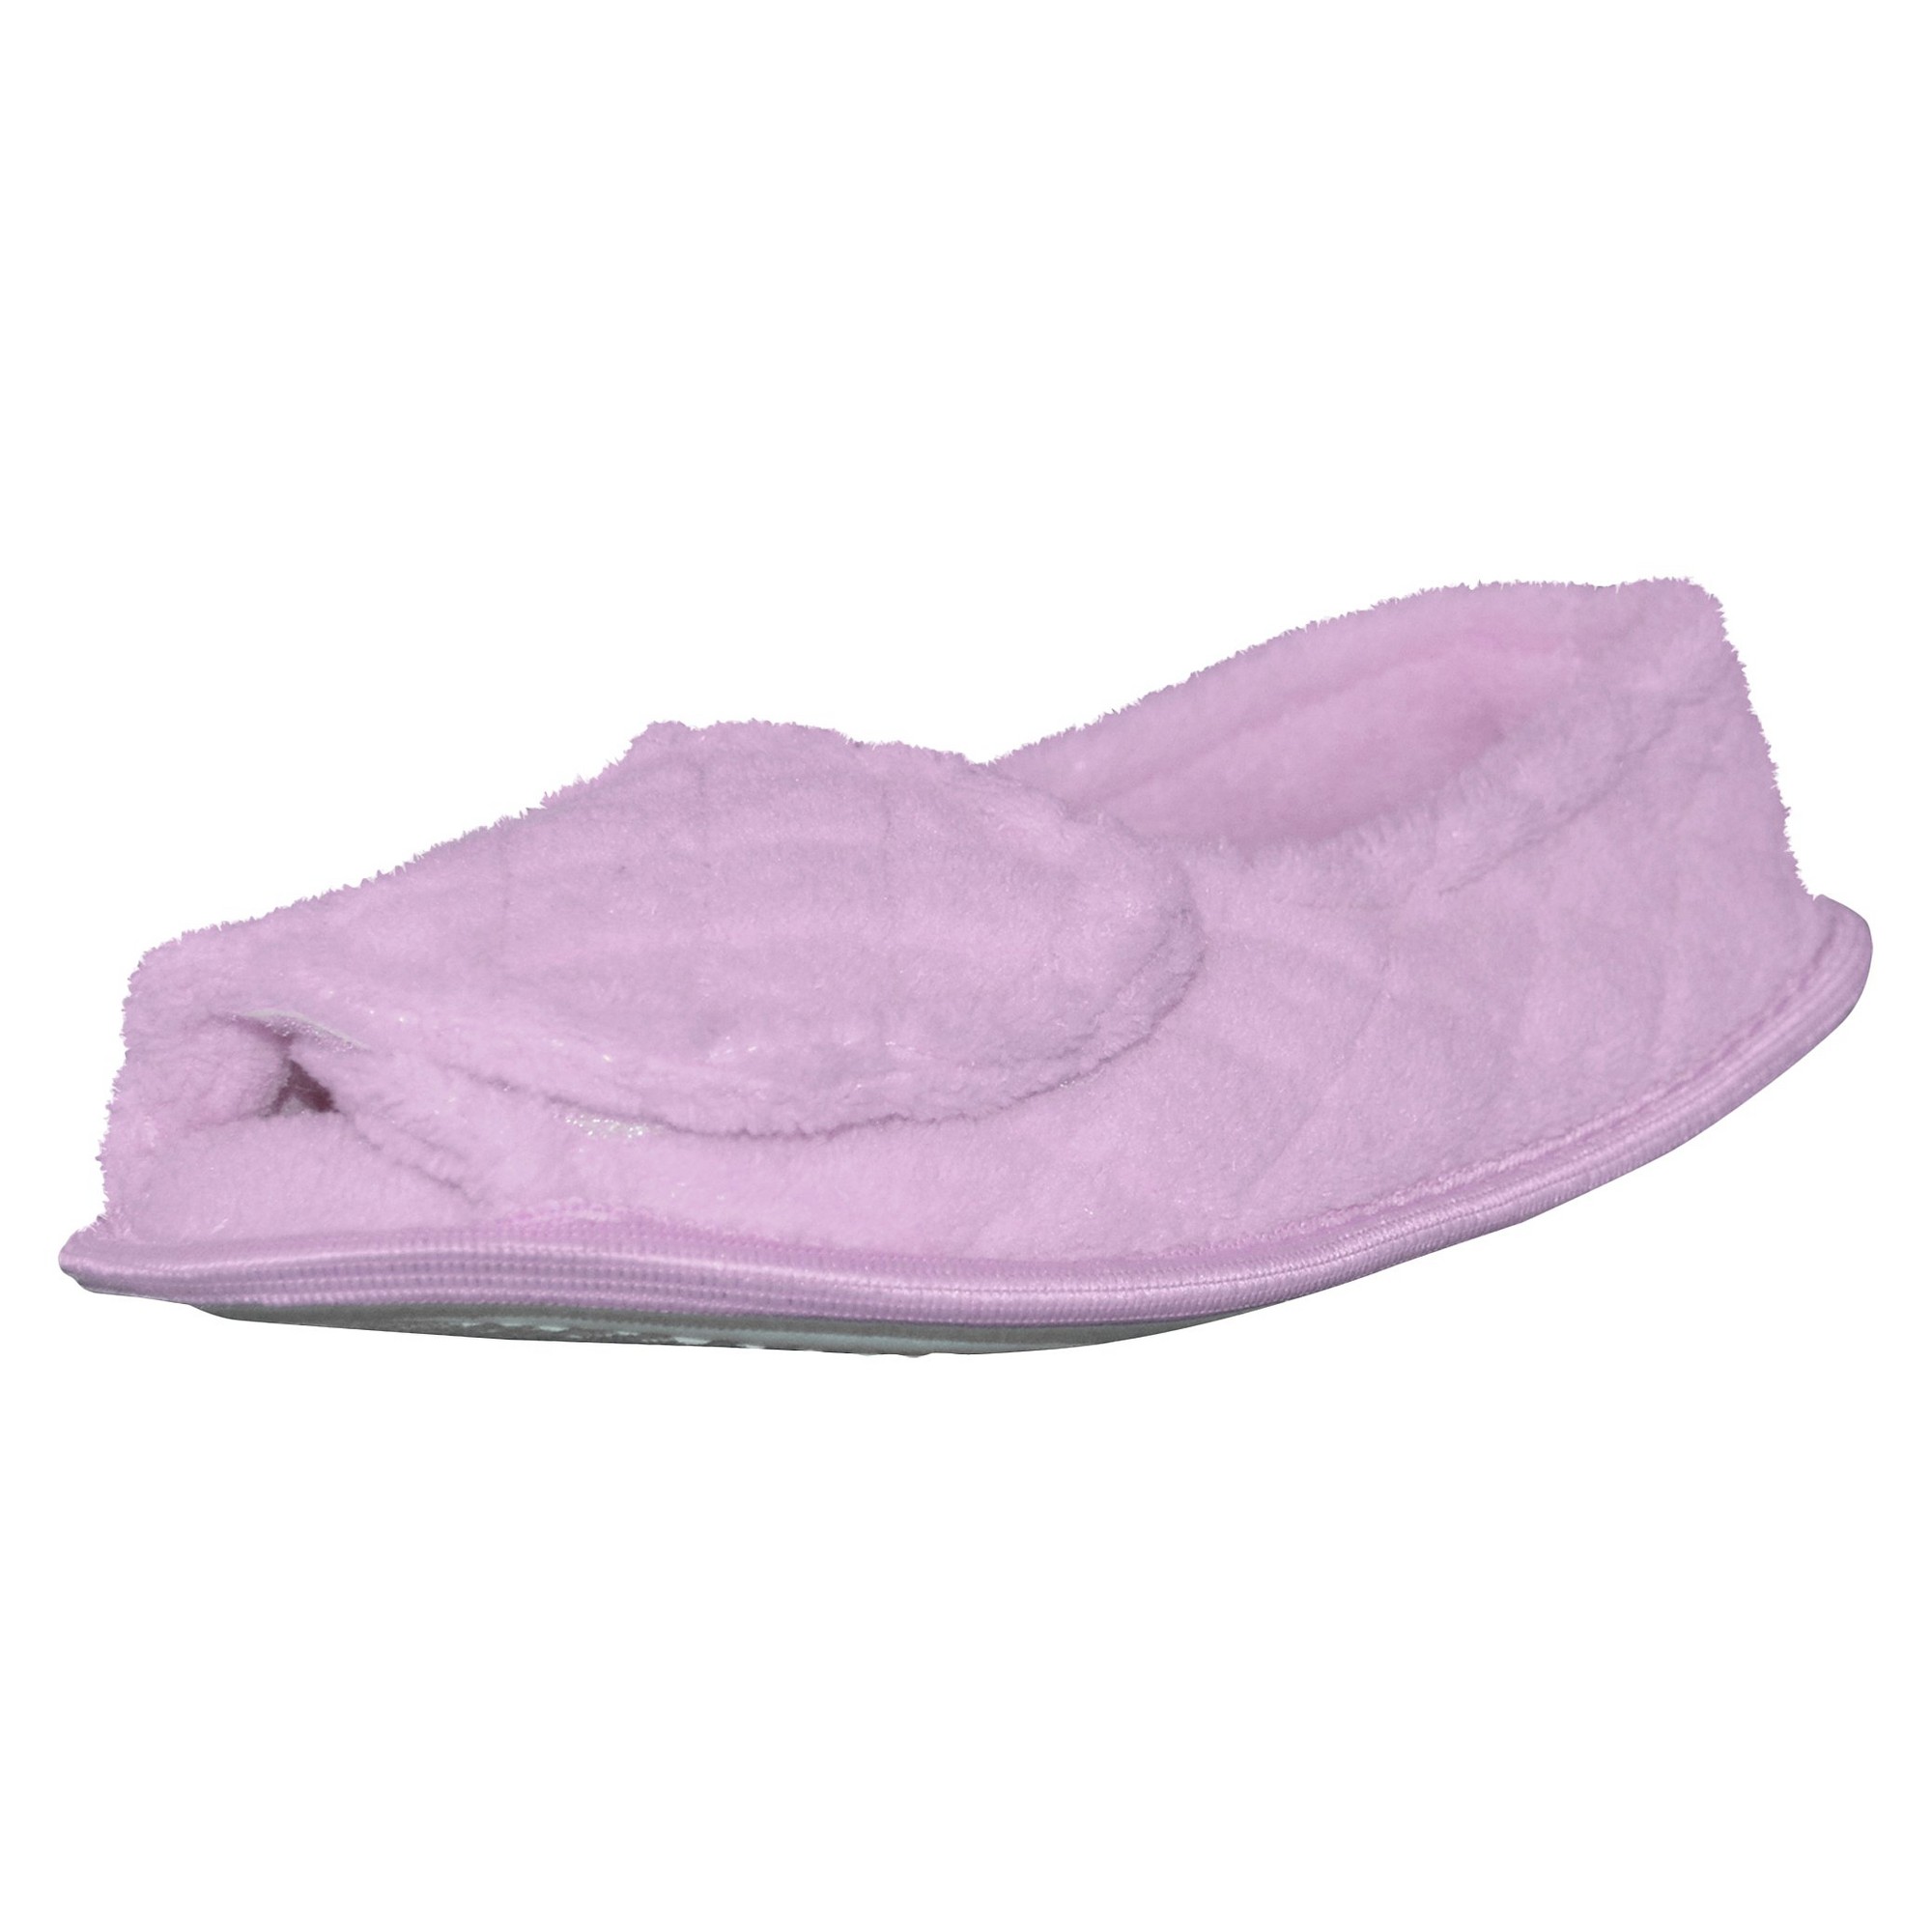 Women's MUK LUKS Micro Chenille Slippers - Lavender S(5-6), Size: Small (5-6), Purple